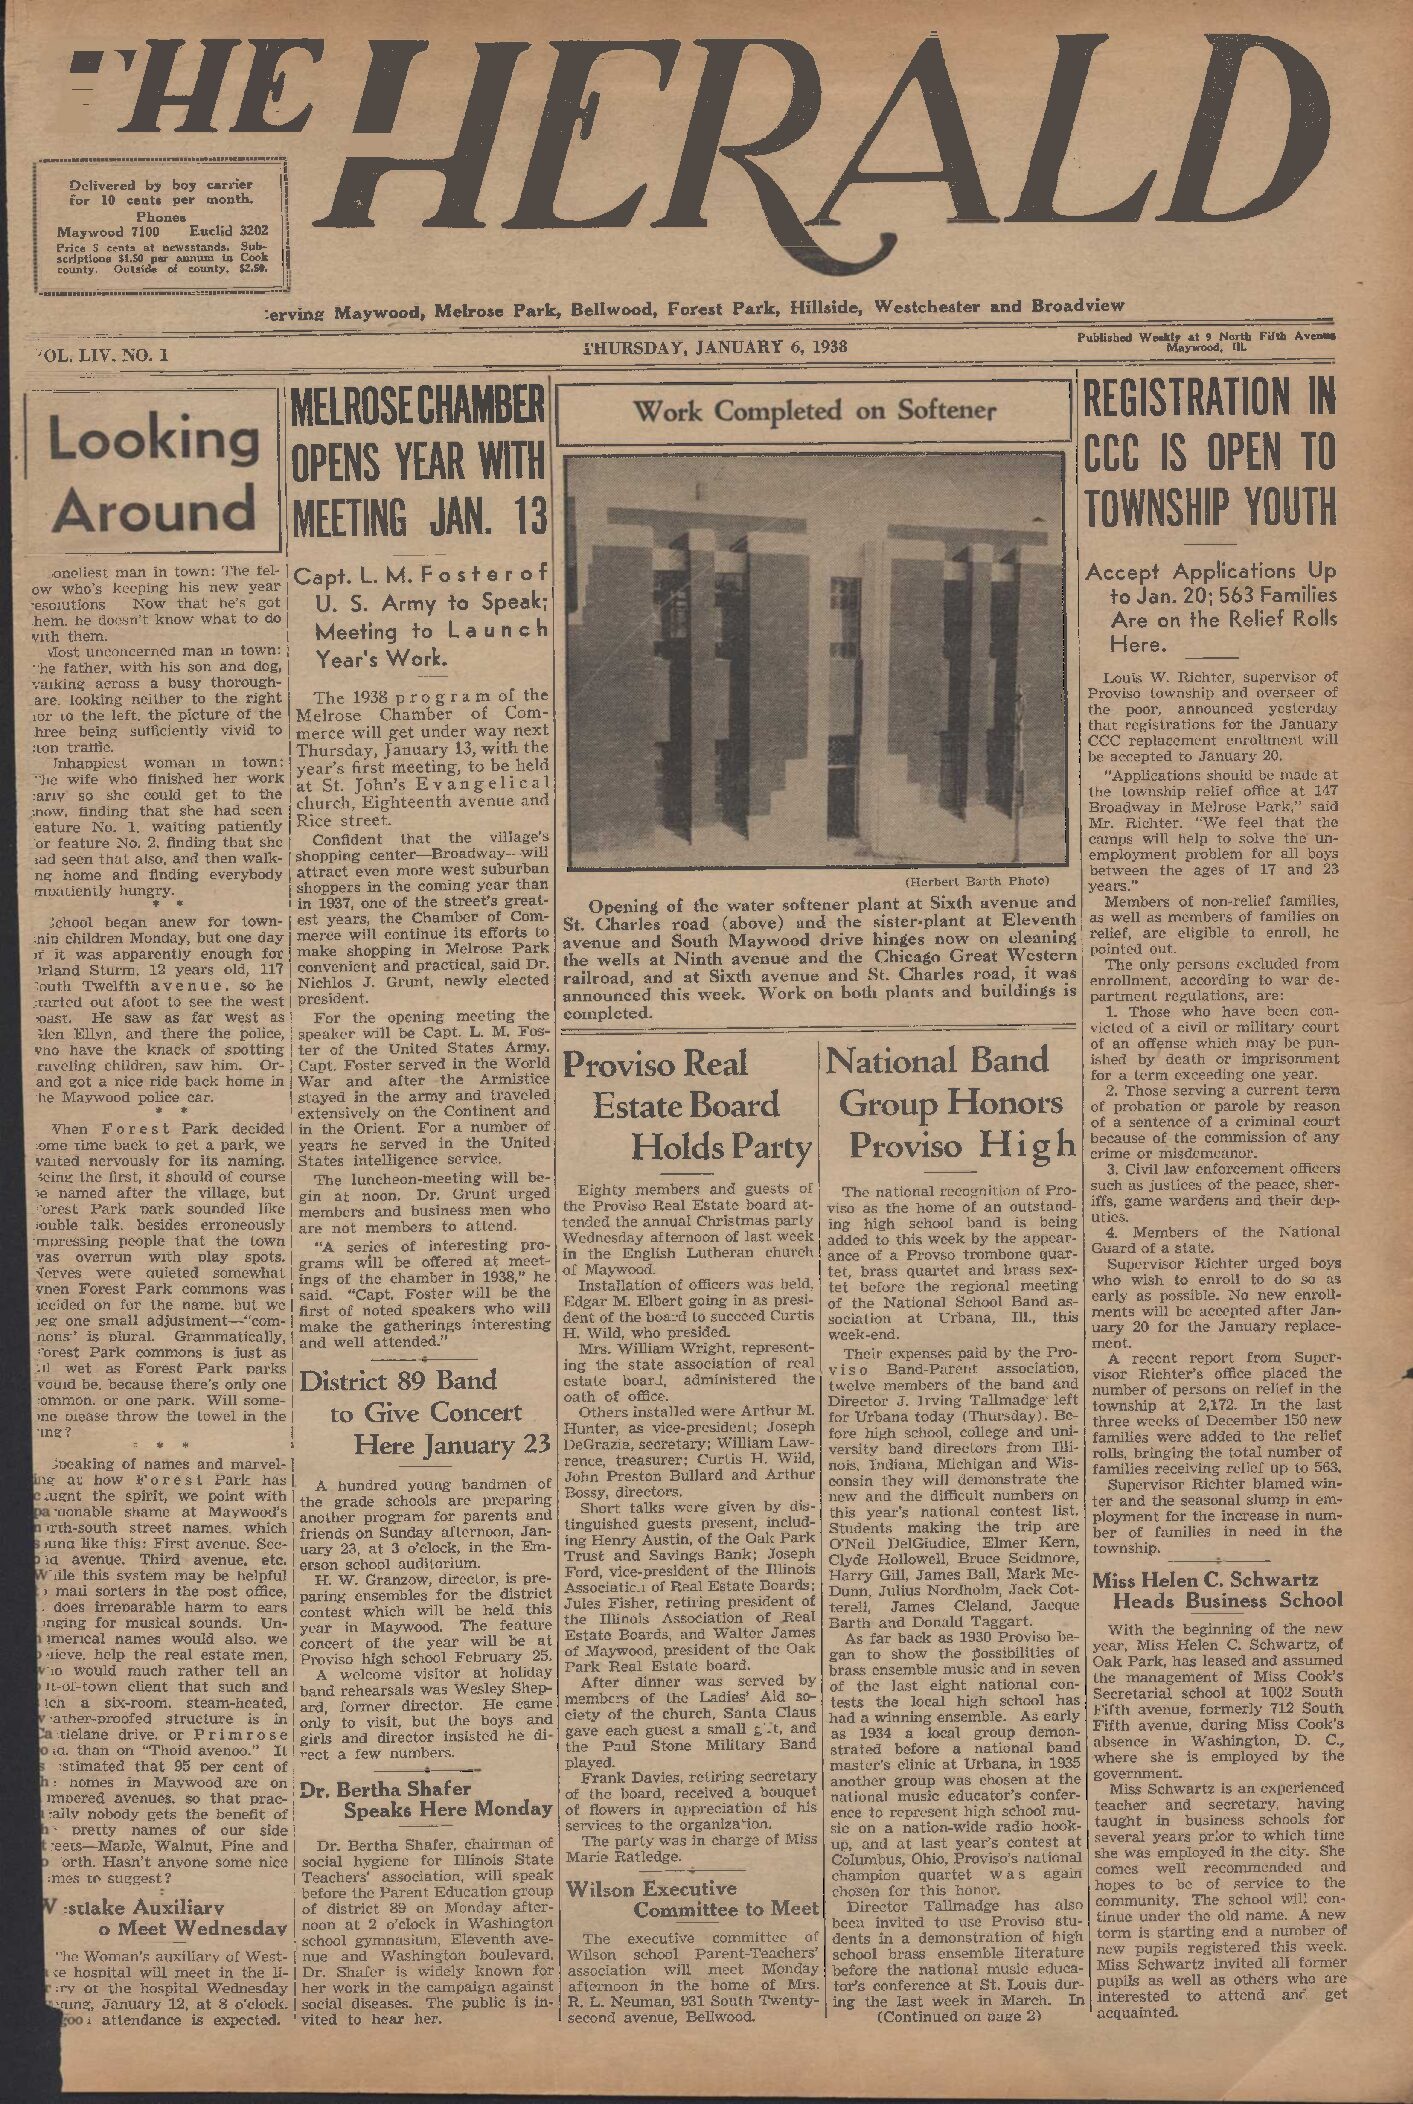 The Herald – 19380106